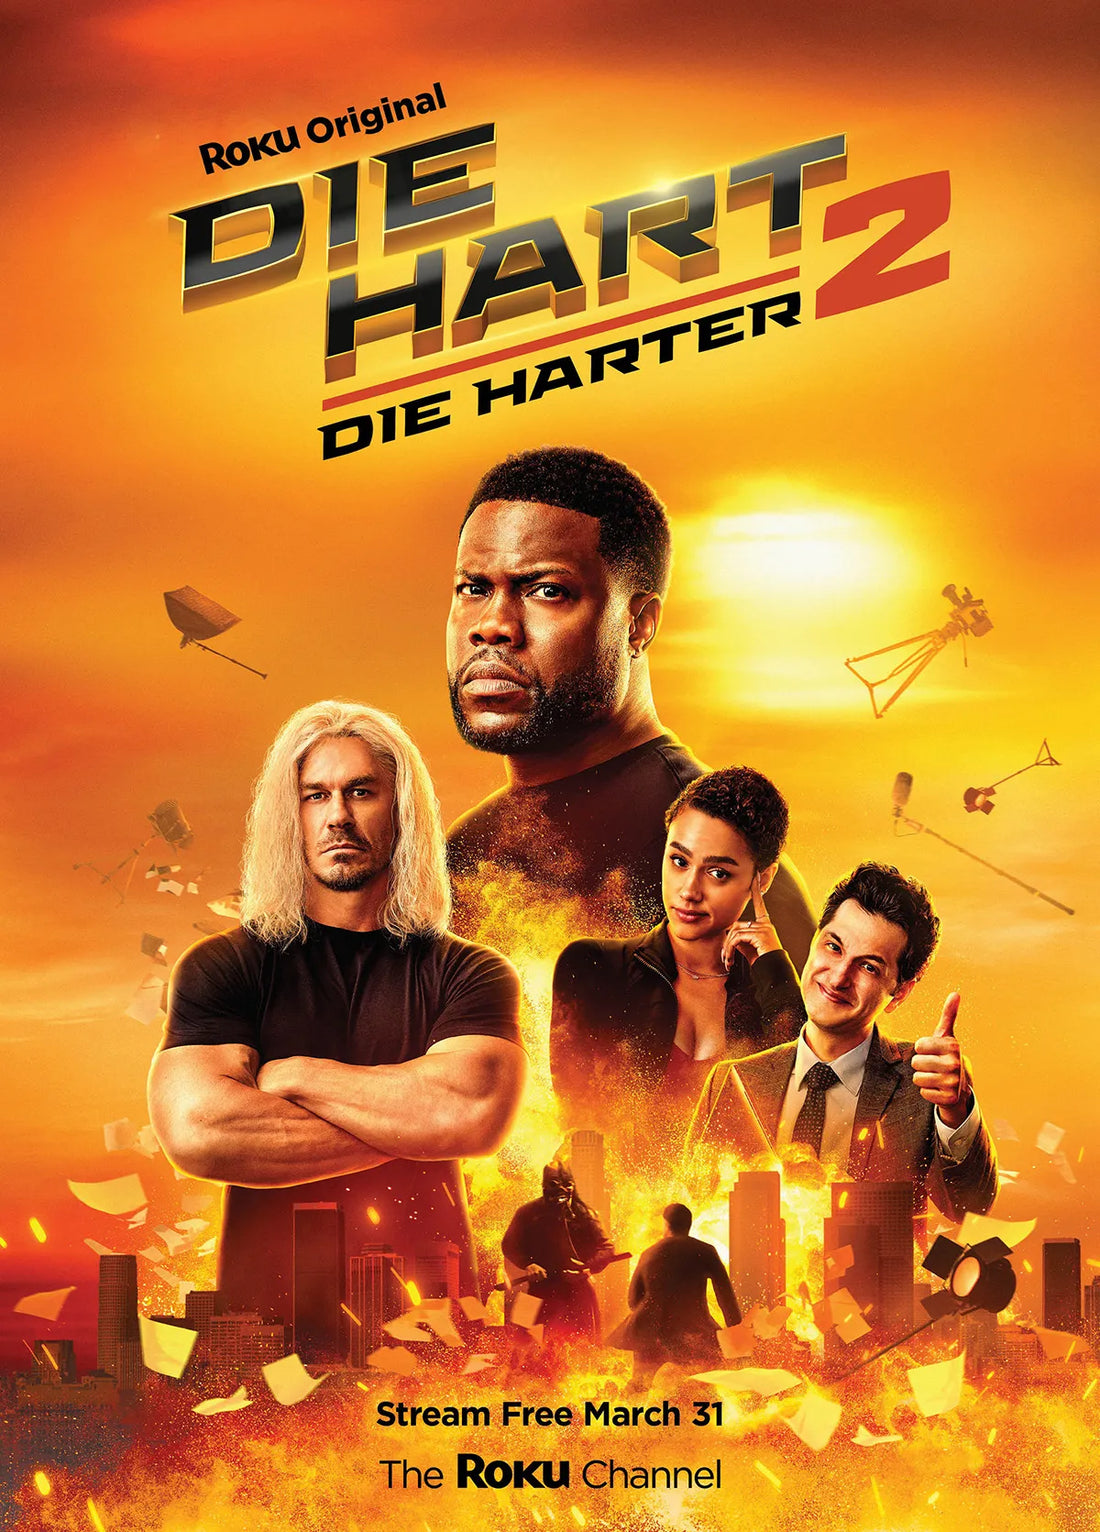 Die Hart 2 Die Harter trailer, cast, where to watch, release date